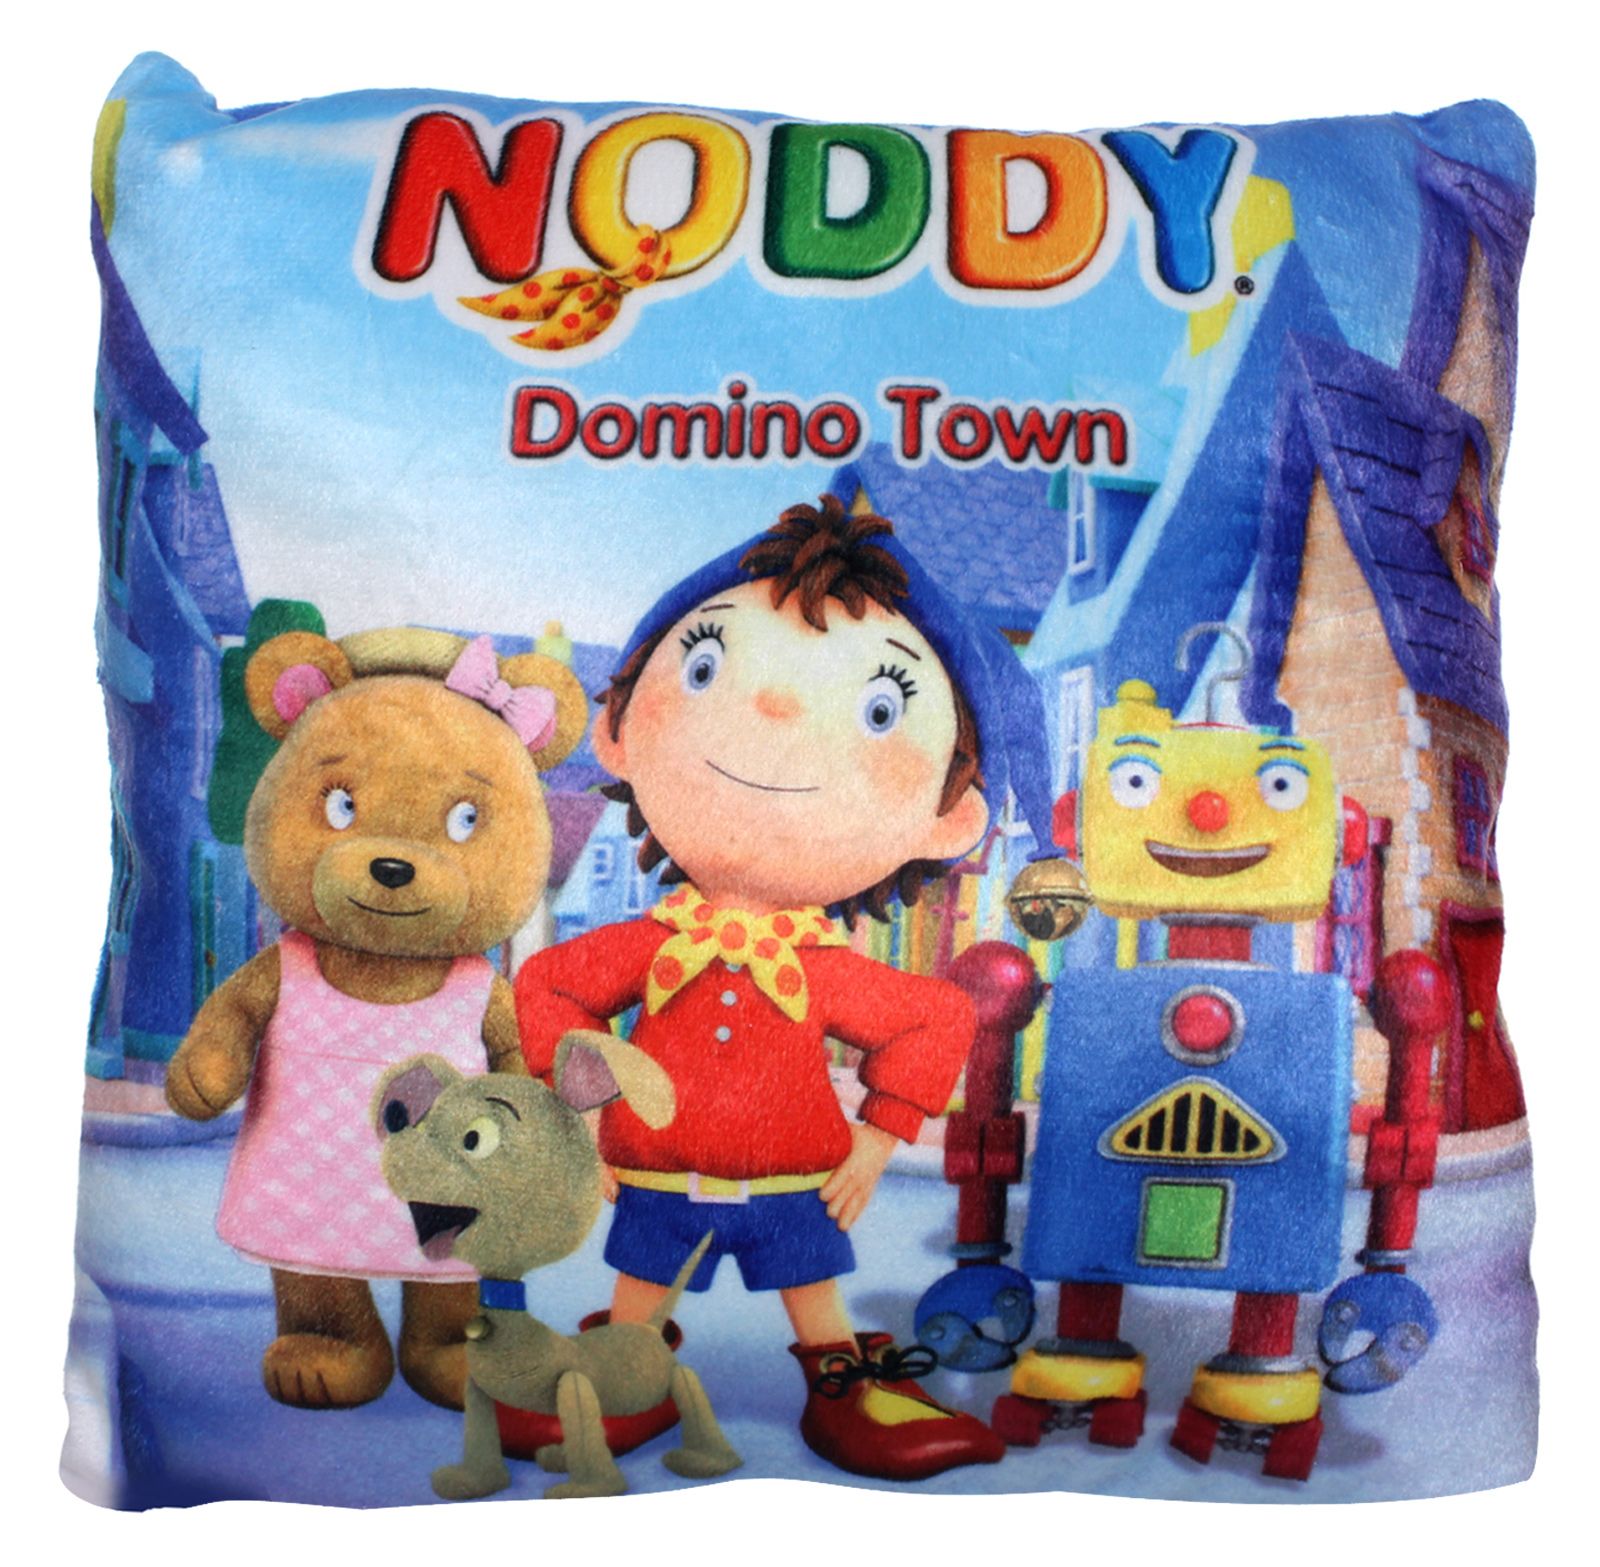 Noddy Square Shaped Cushion - Noddy Domino Town